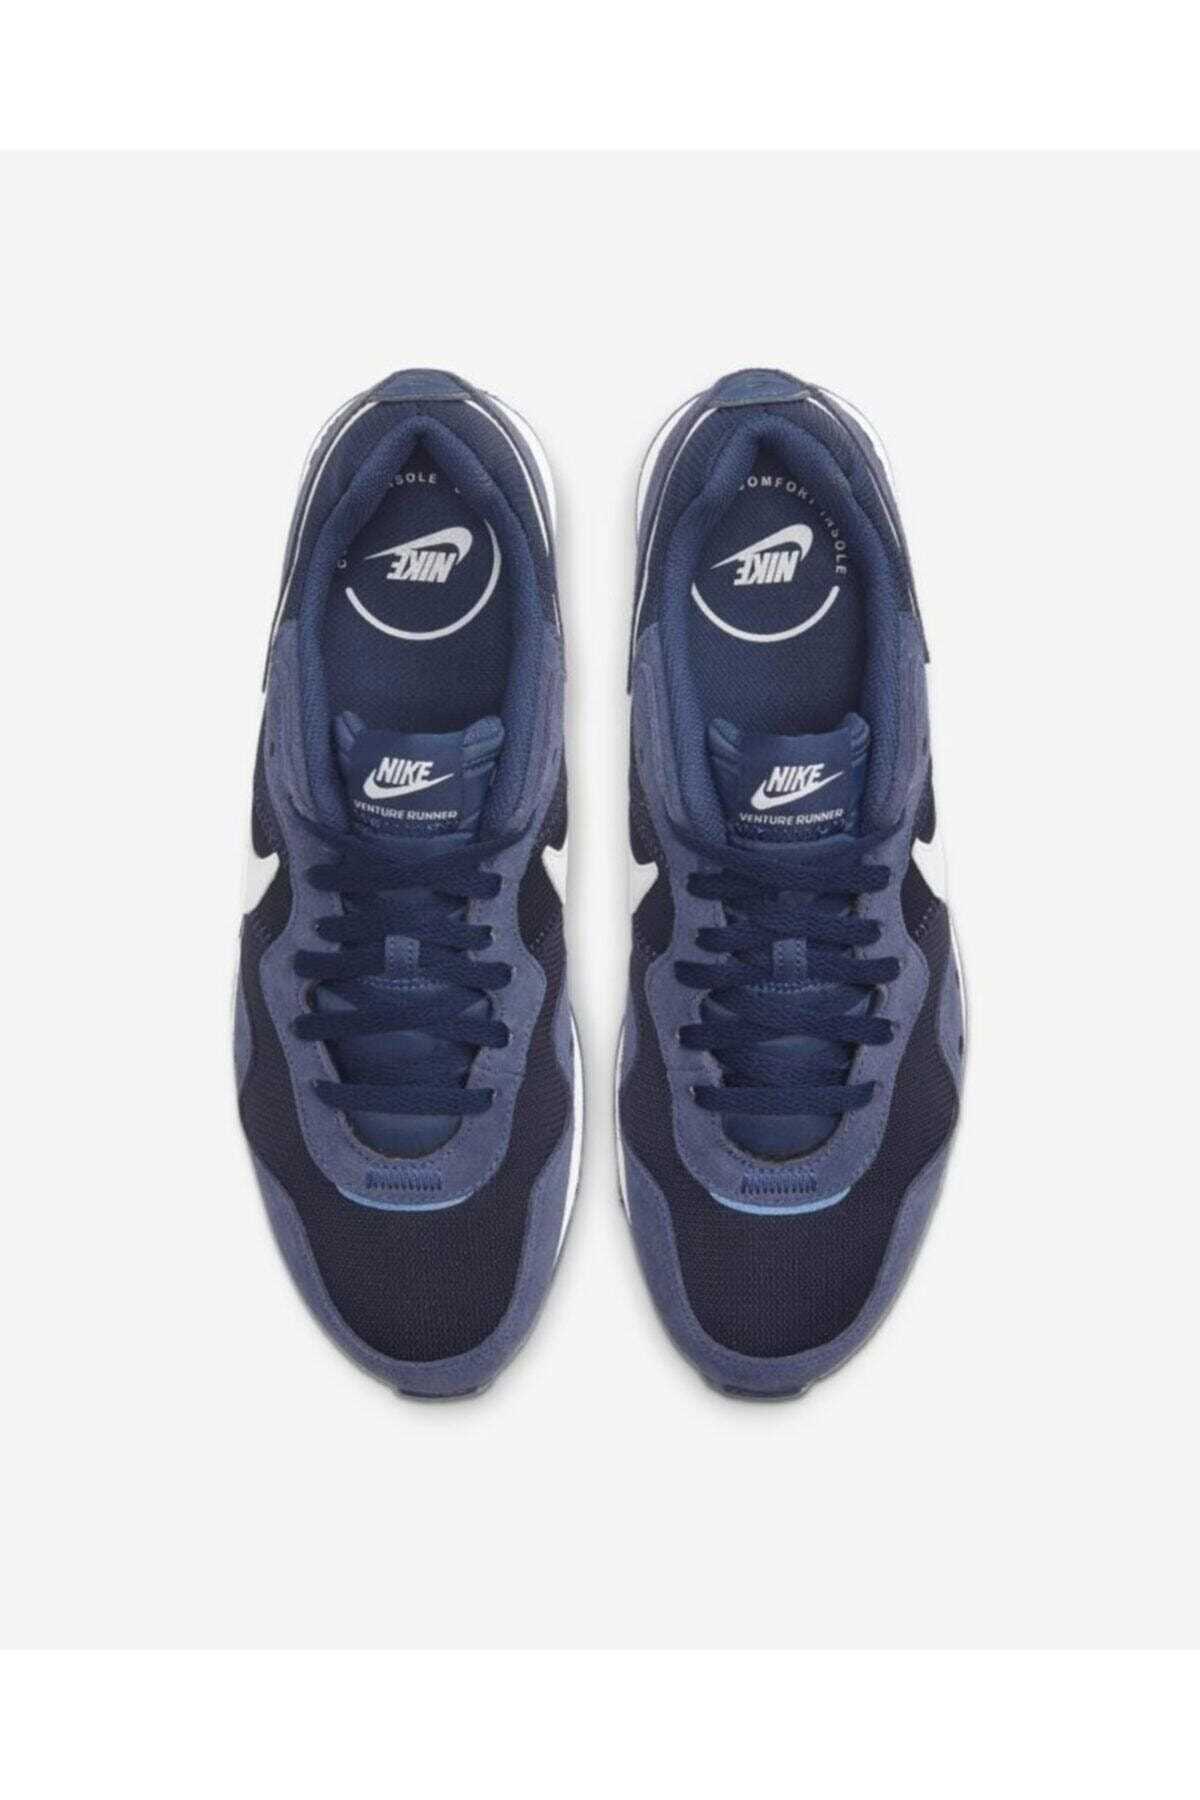 سفارش نقدی کفش مخصوص پیاده روی ارزان شیک Nike اورجینال رنگ لاجوردی کد ty43831995